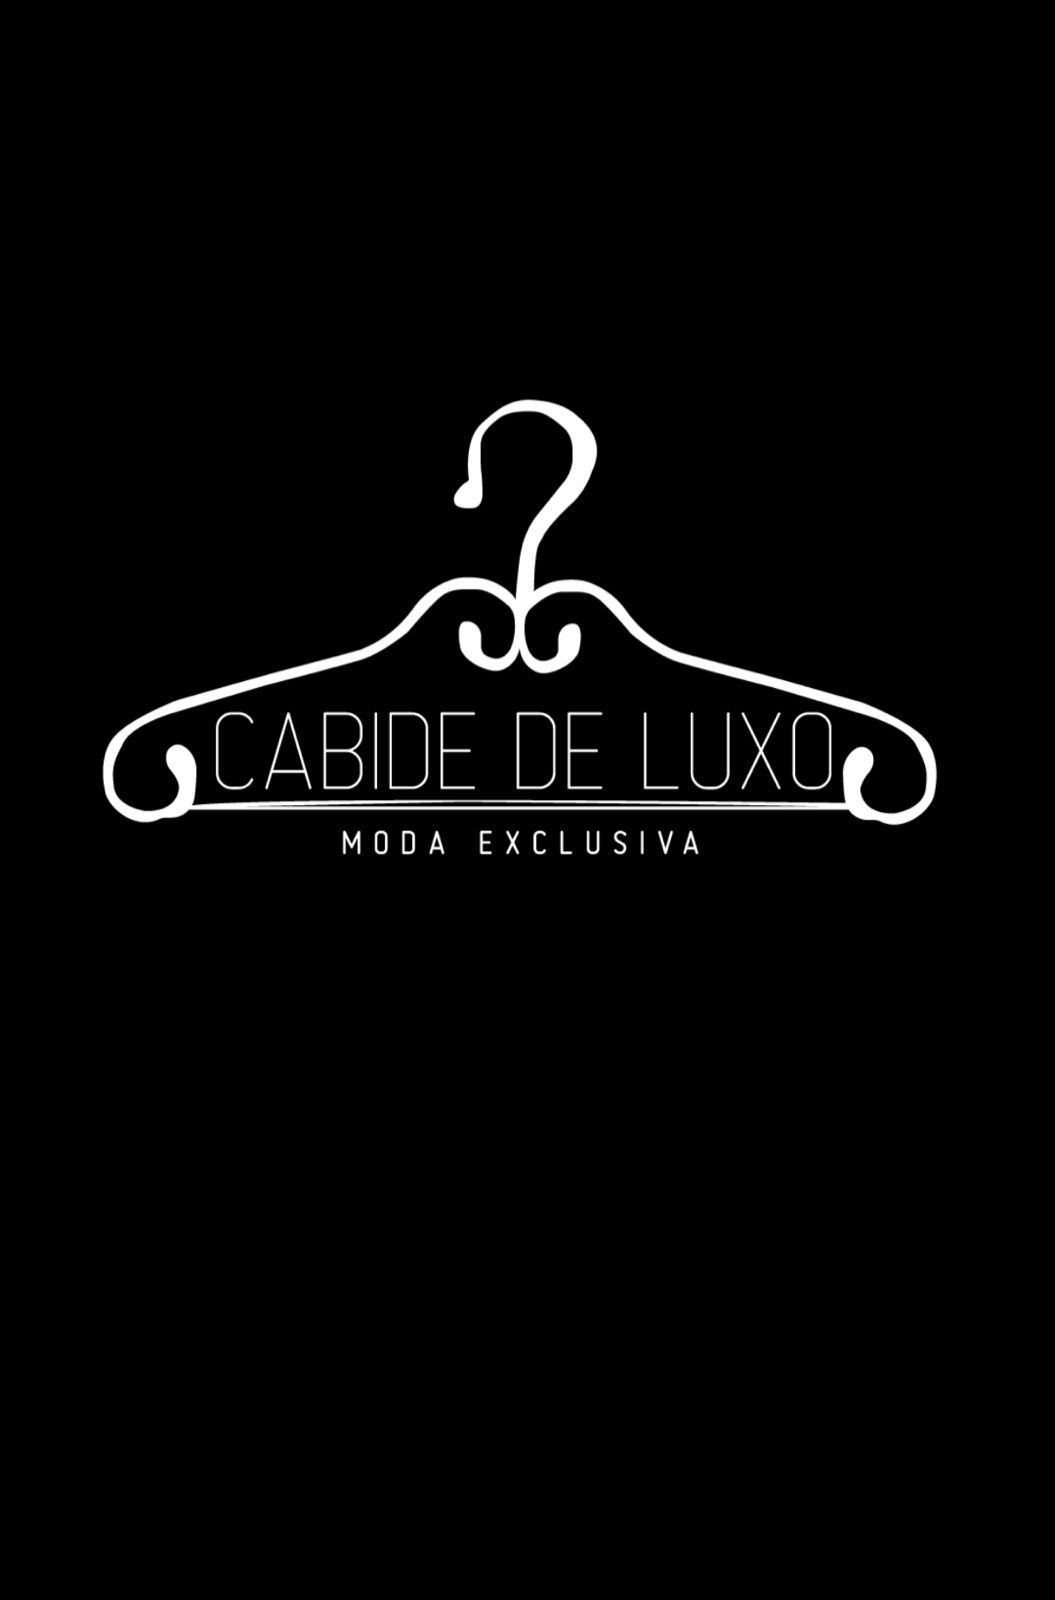 CABIDE DE LUXO